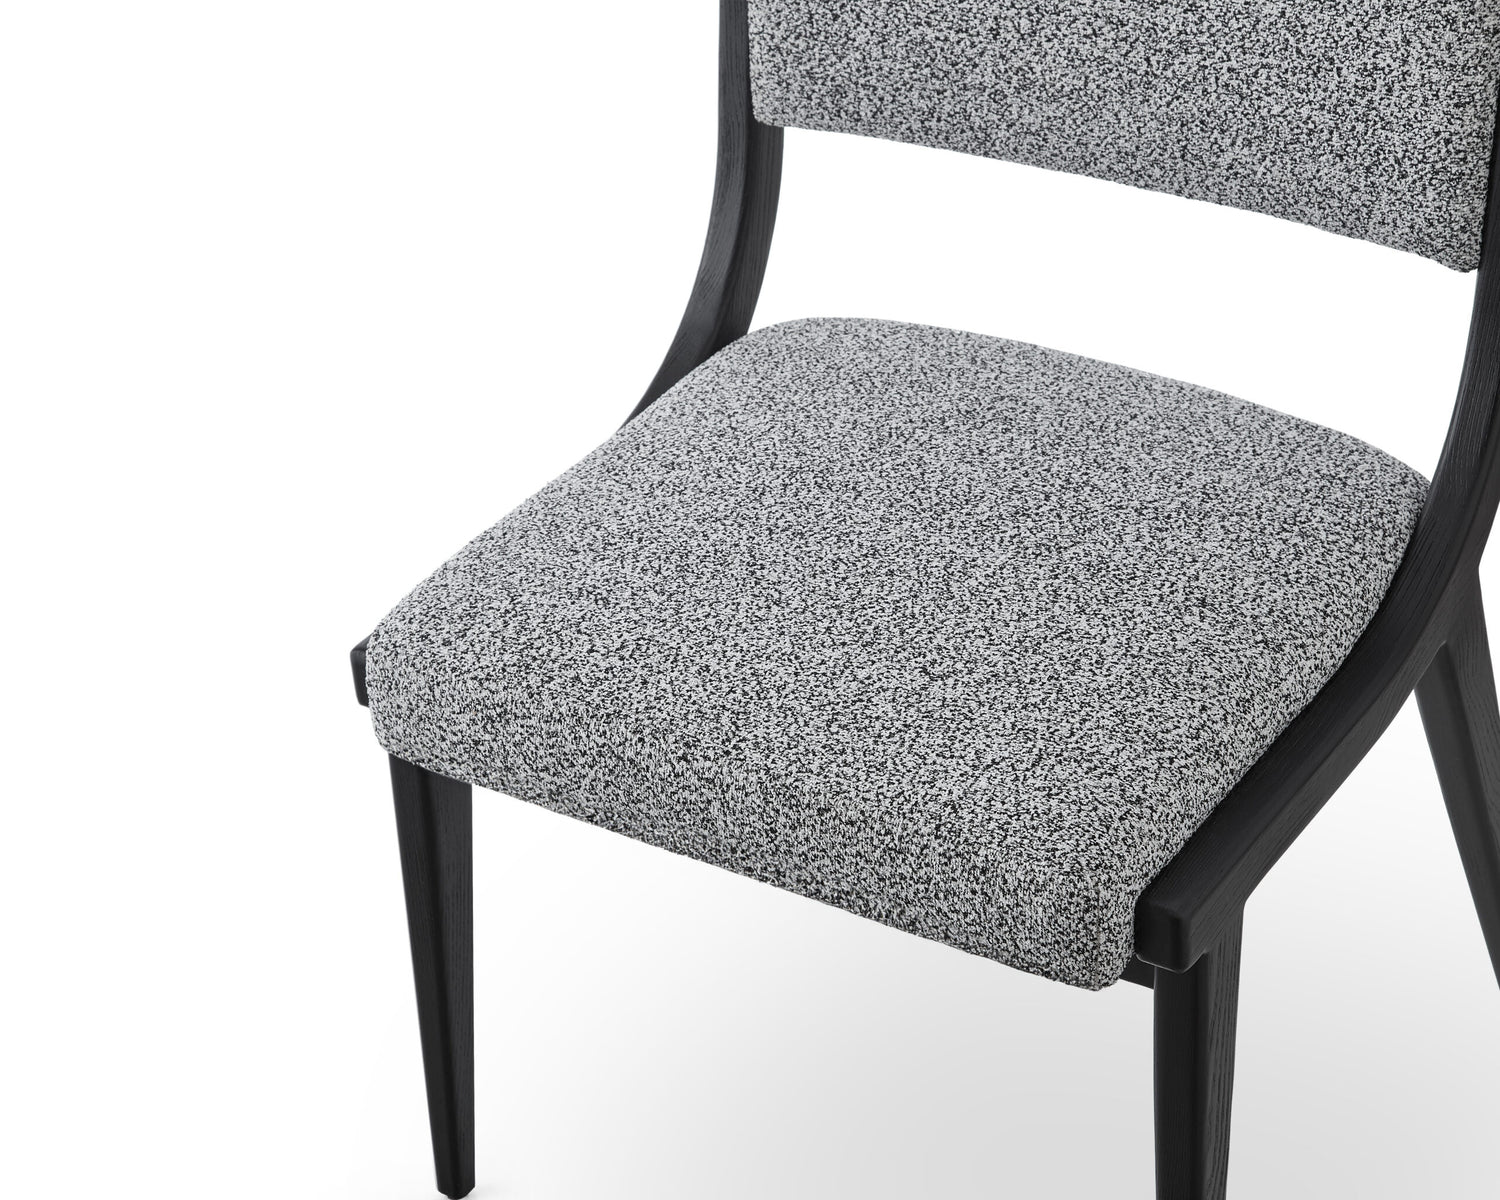 Miami dining chair – cordoba speckle grey &amp; matt black